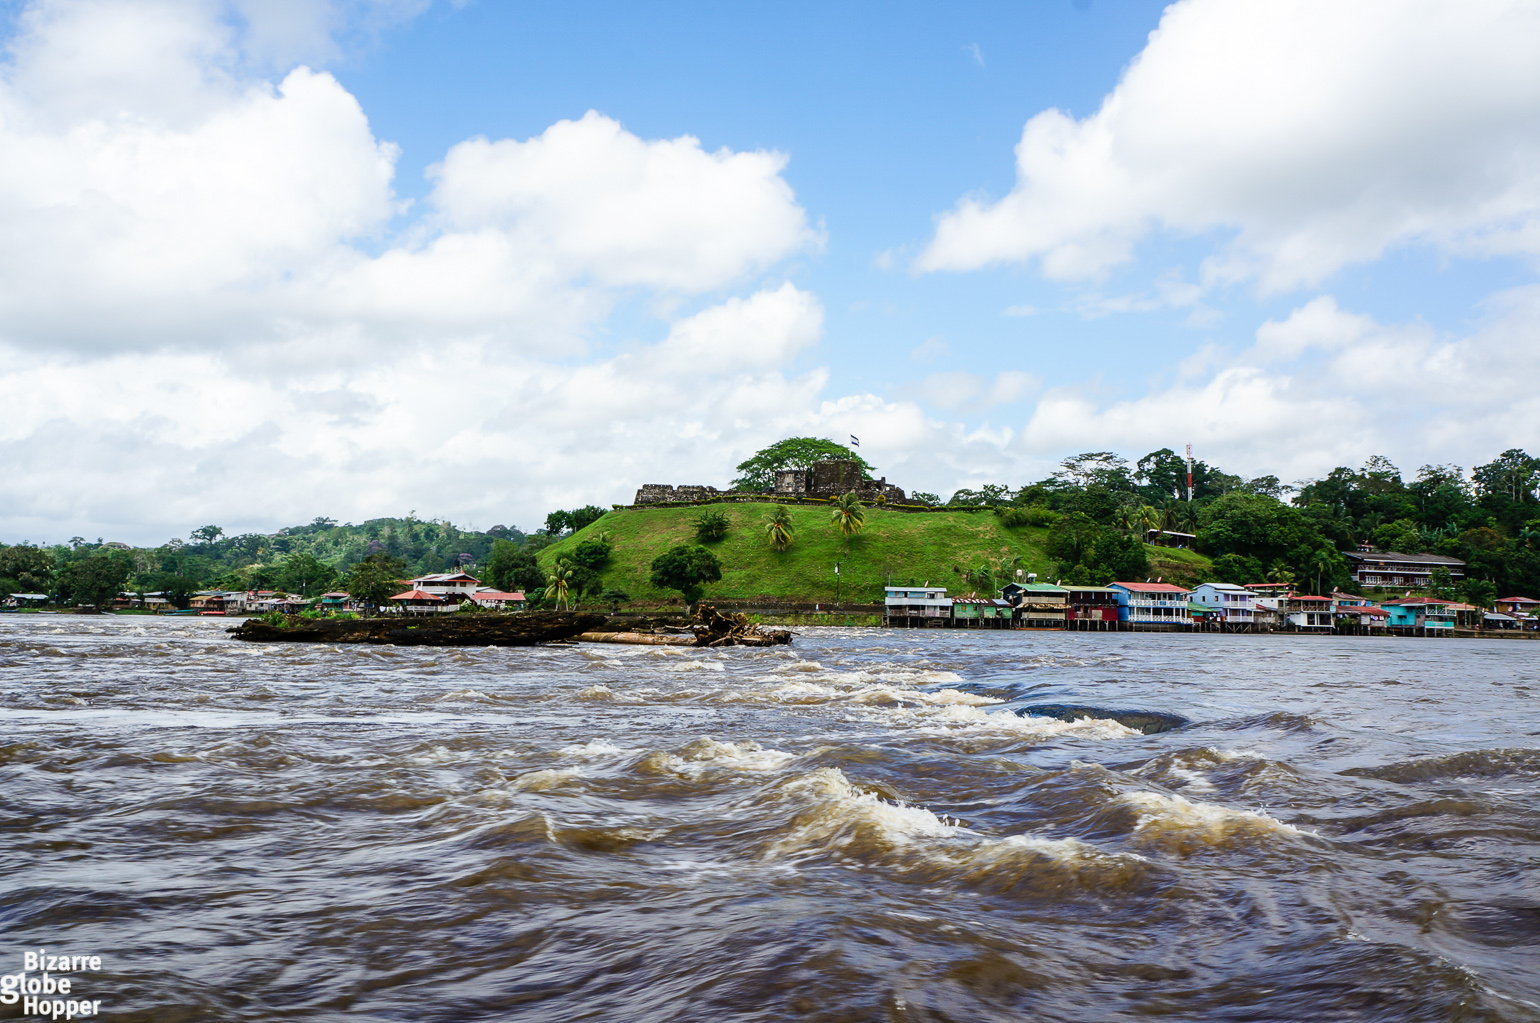 Town of El Castillo at the banks of Rio San Juan River, Nicaragua